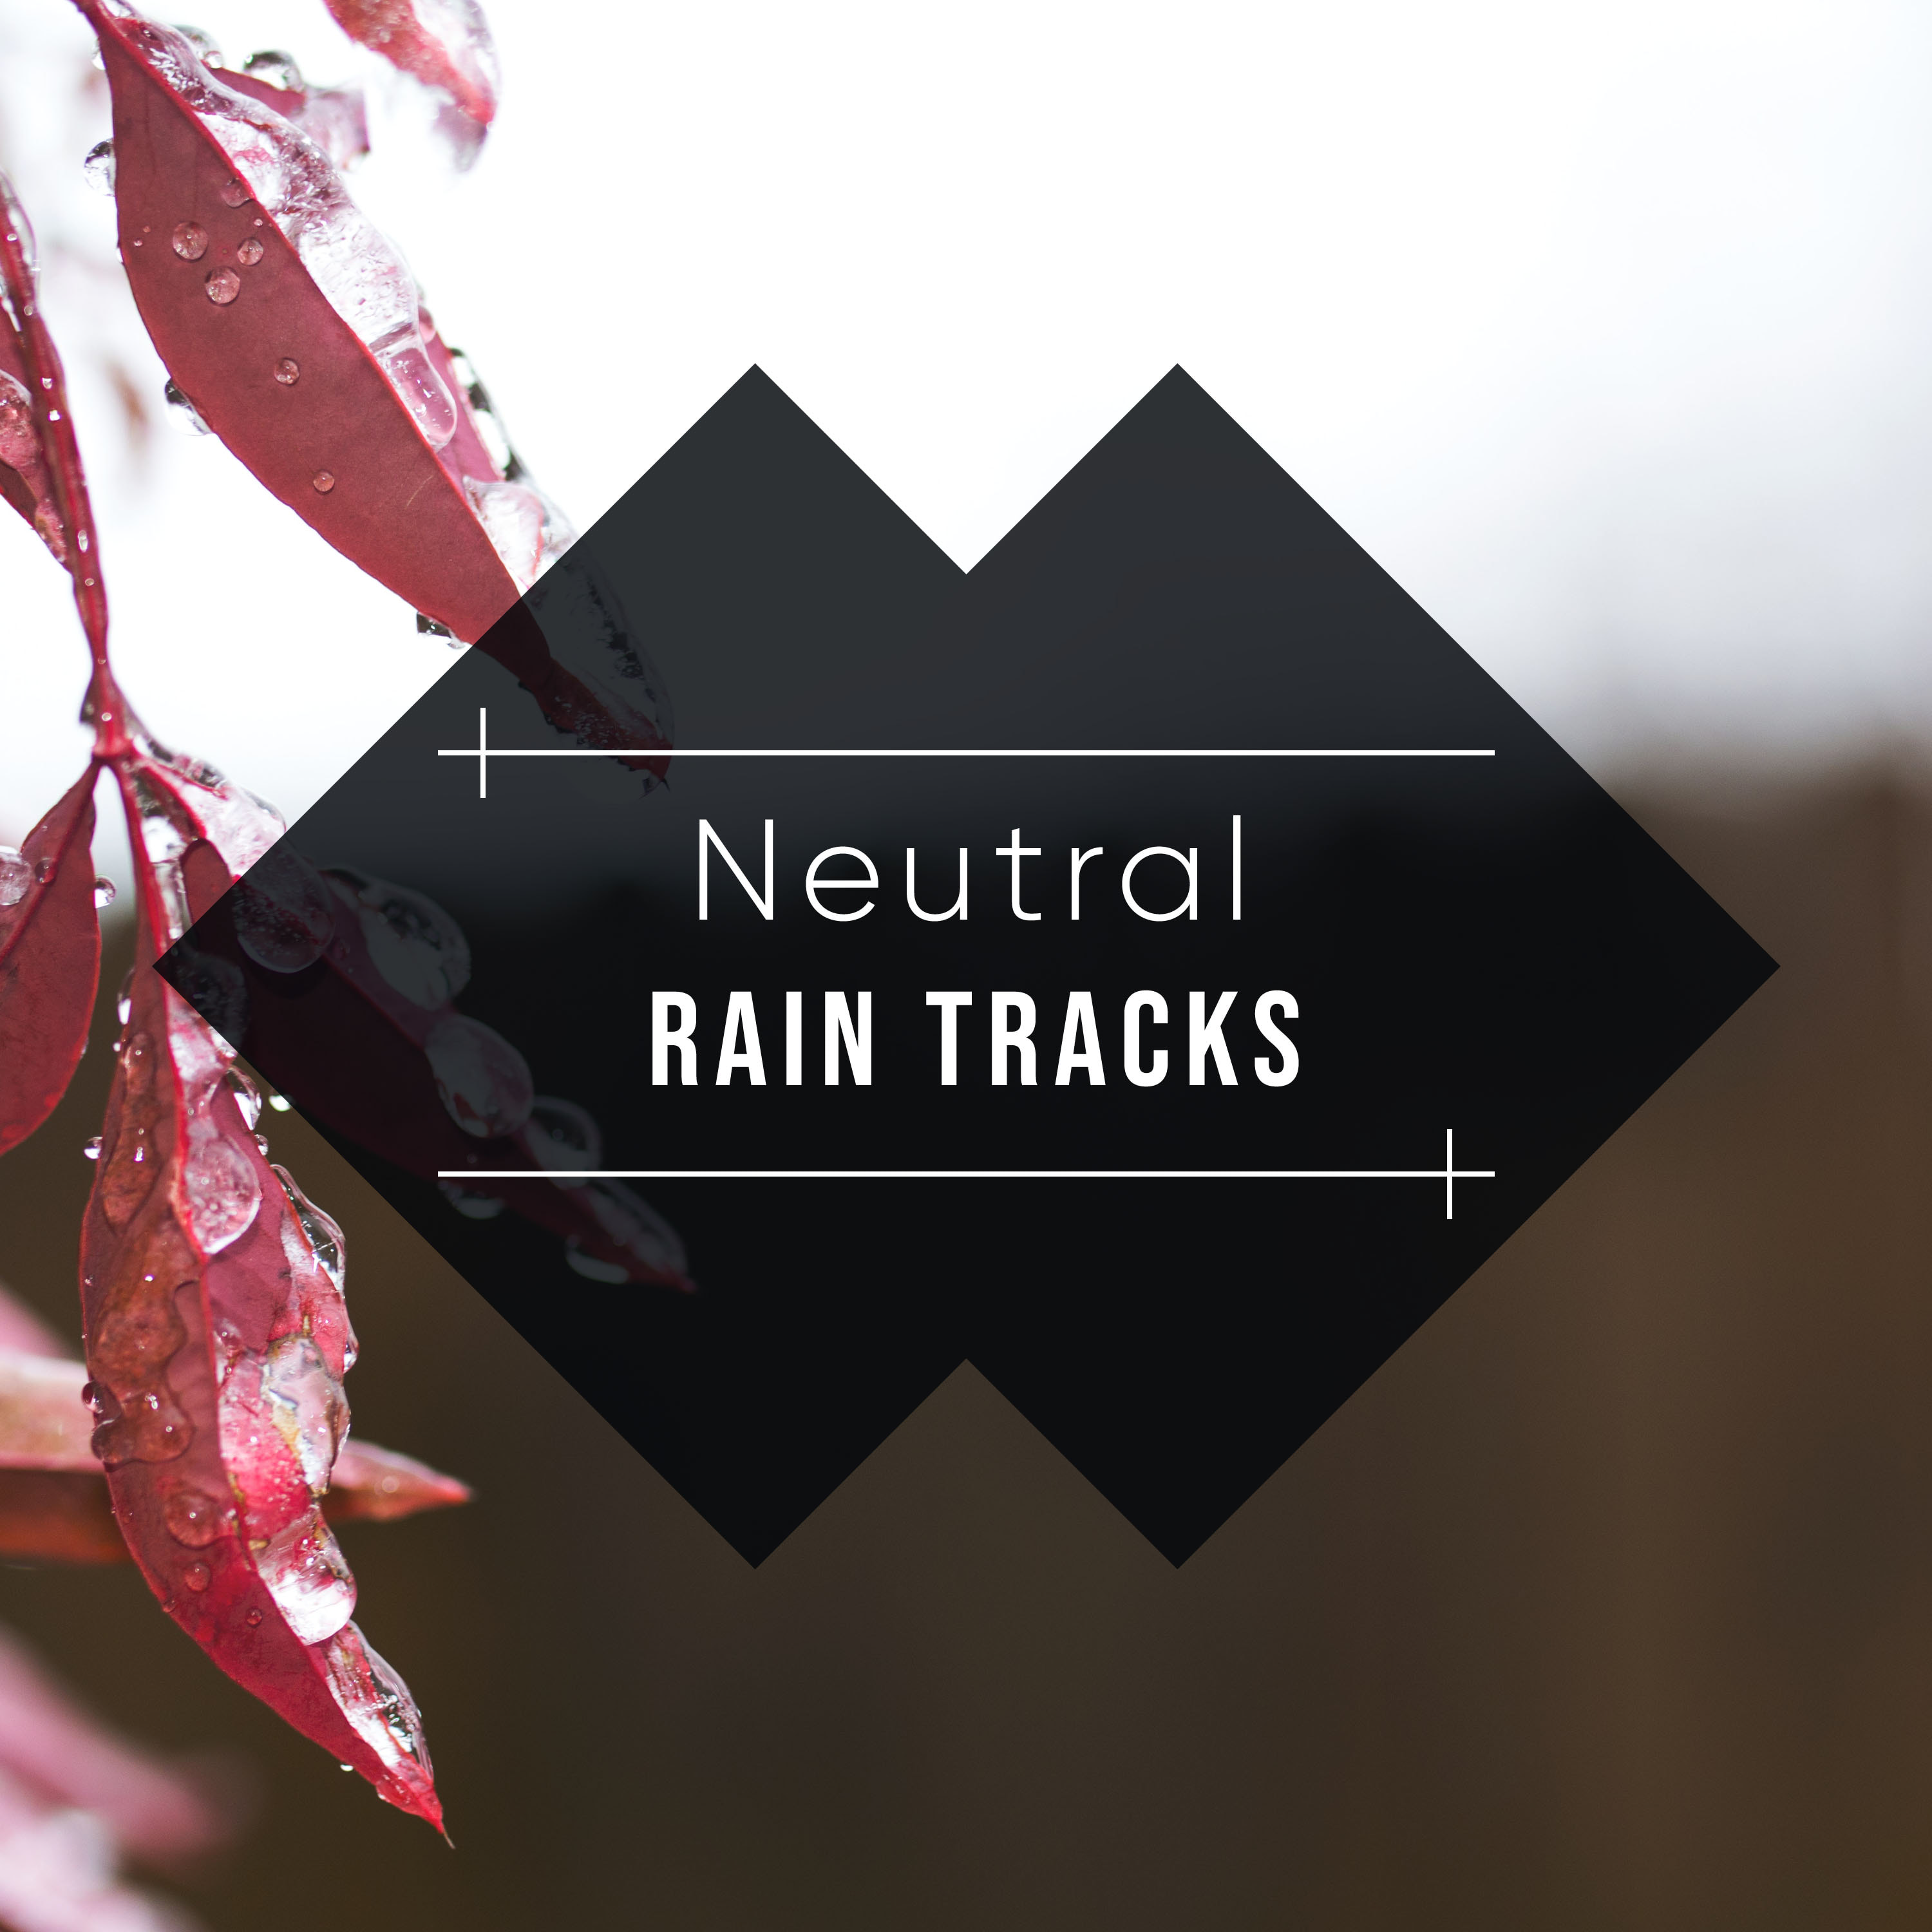 #11 Neutral Rain Tracks from Nature